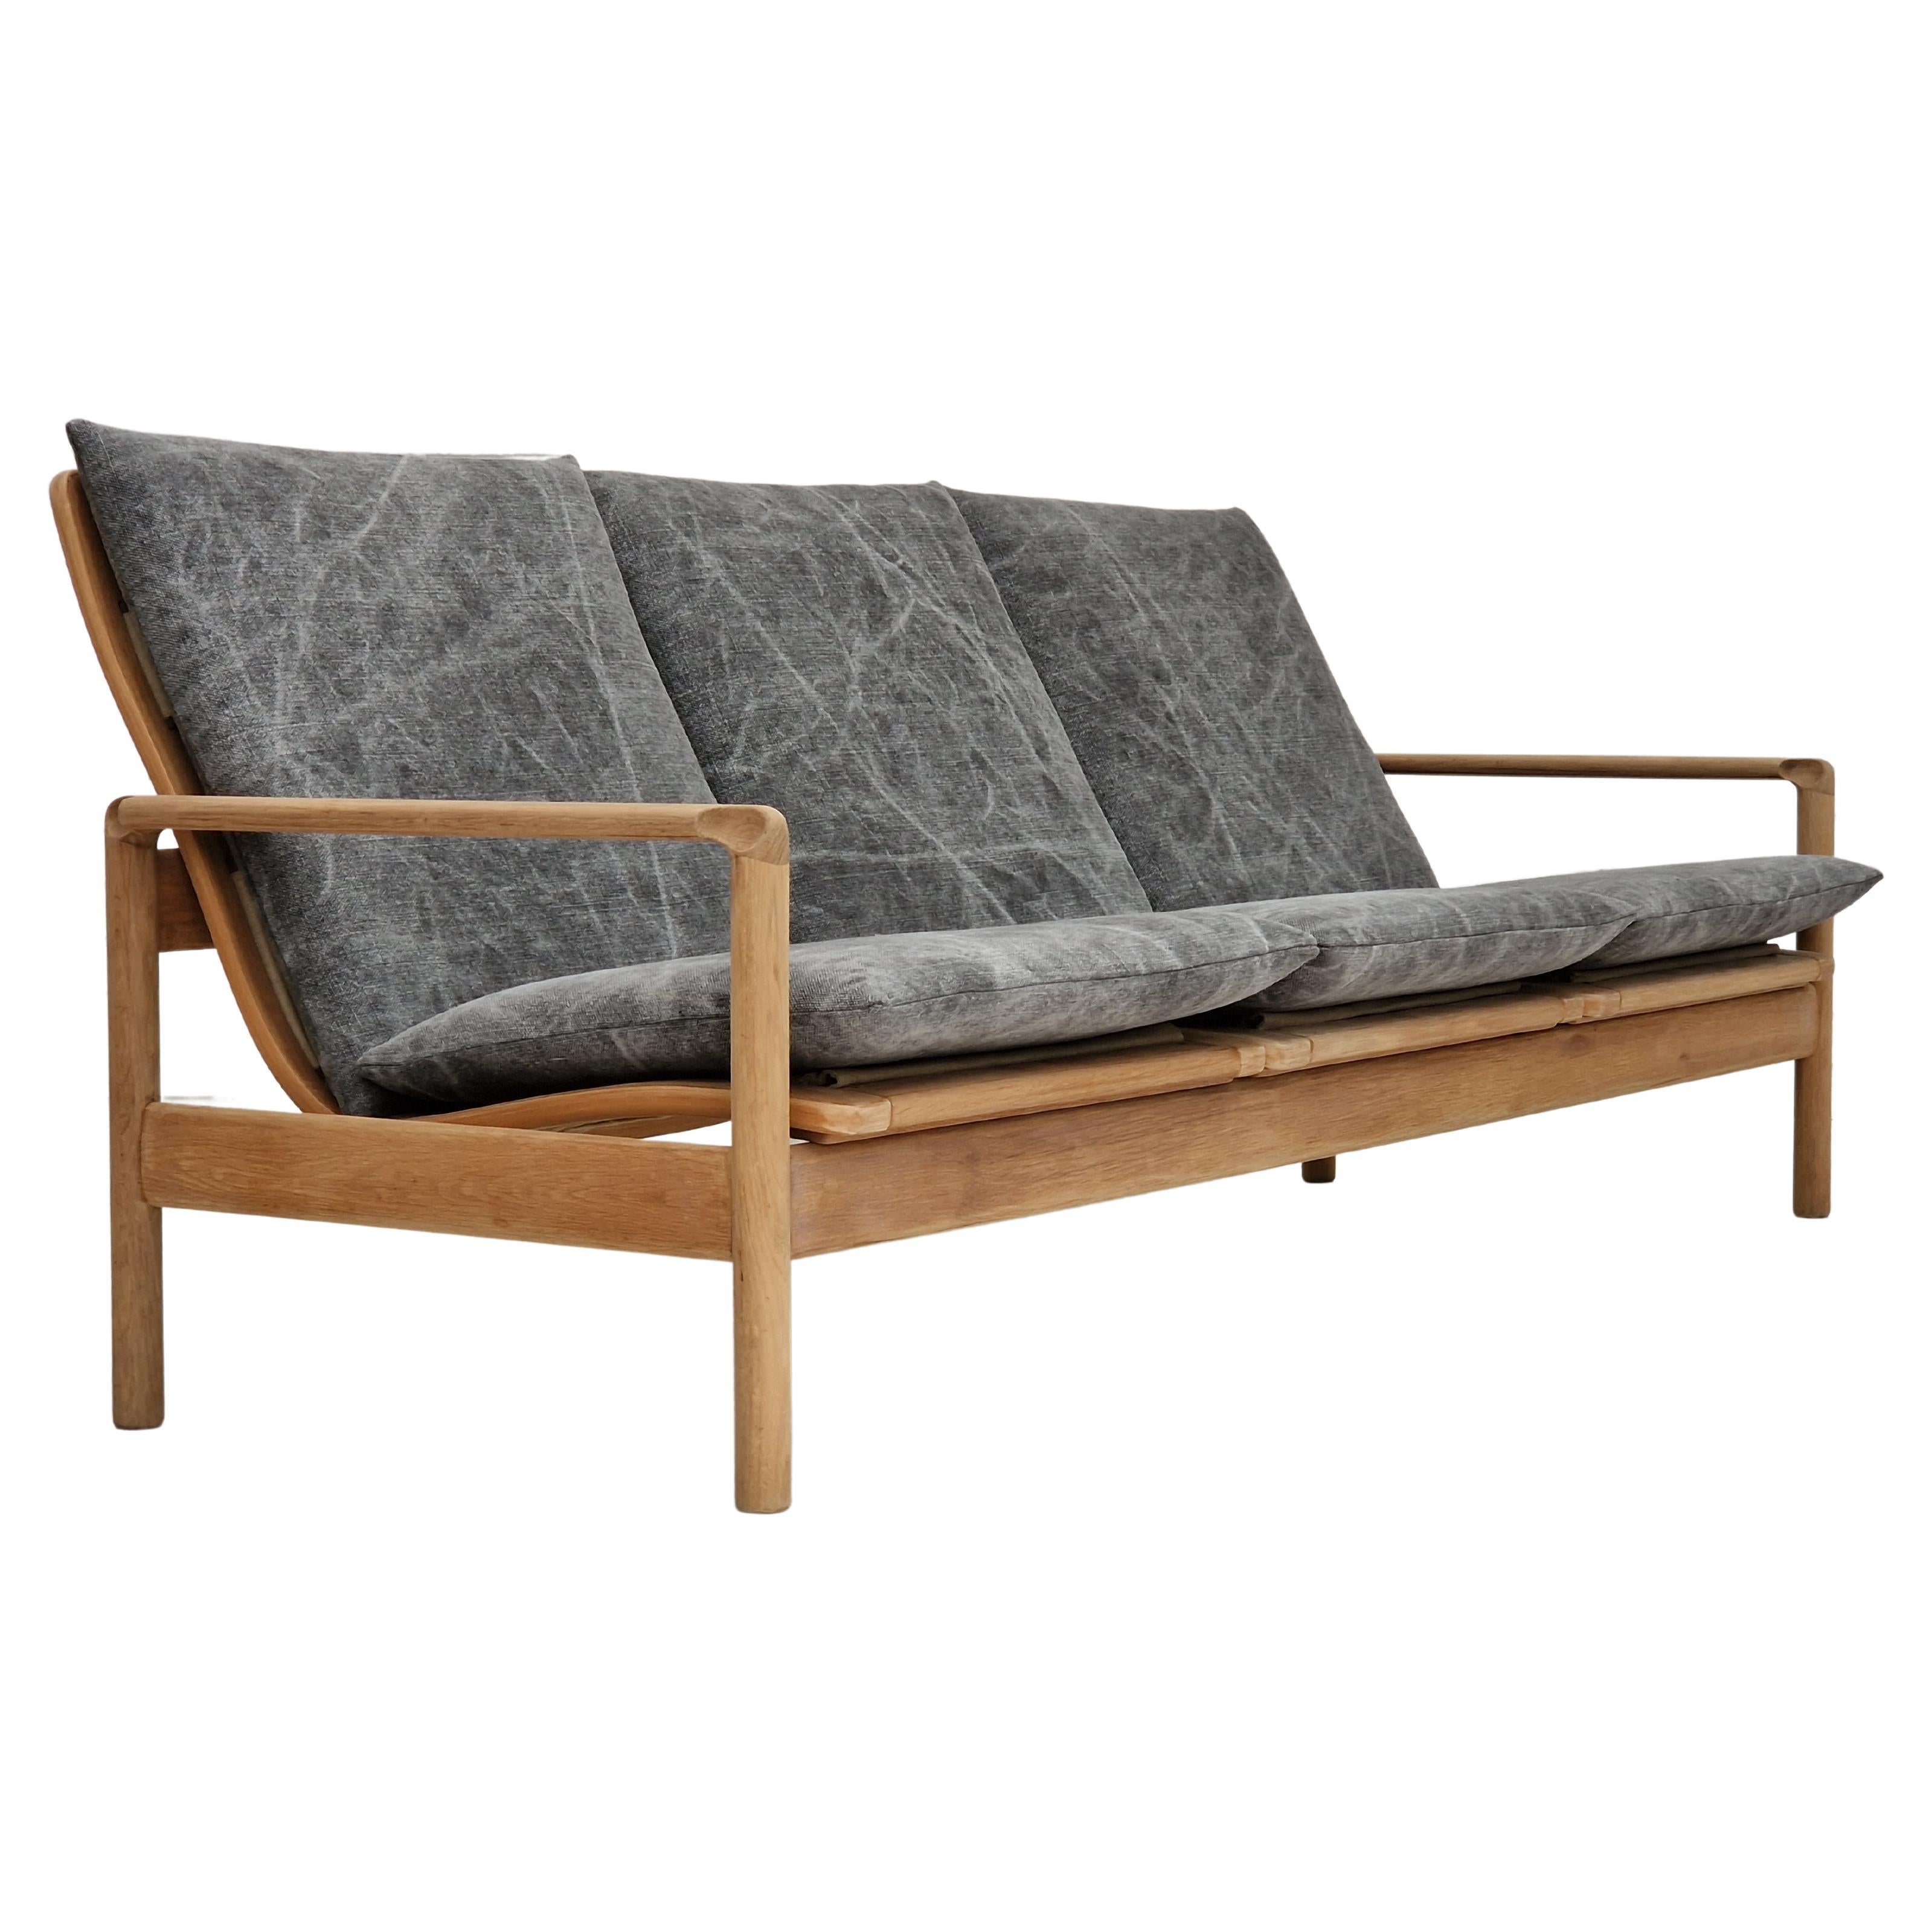 70s, Danish design, renovated 3 seater sofa, linen furniture fabric, oak wood